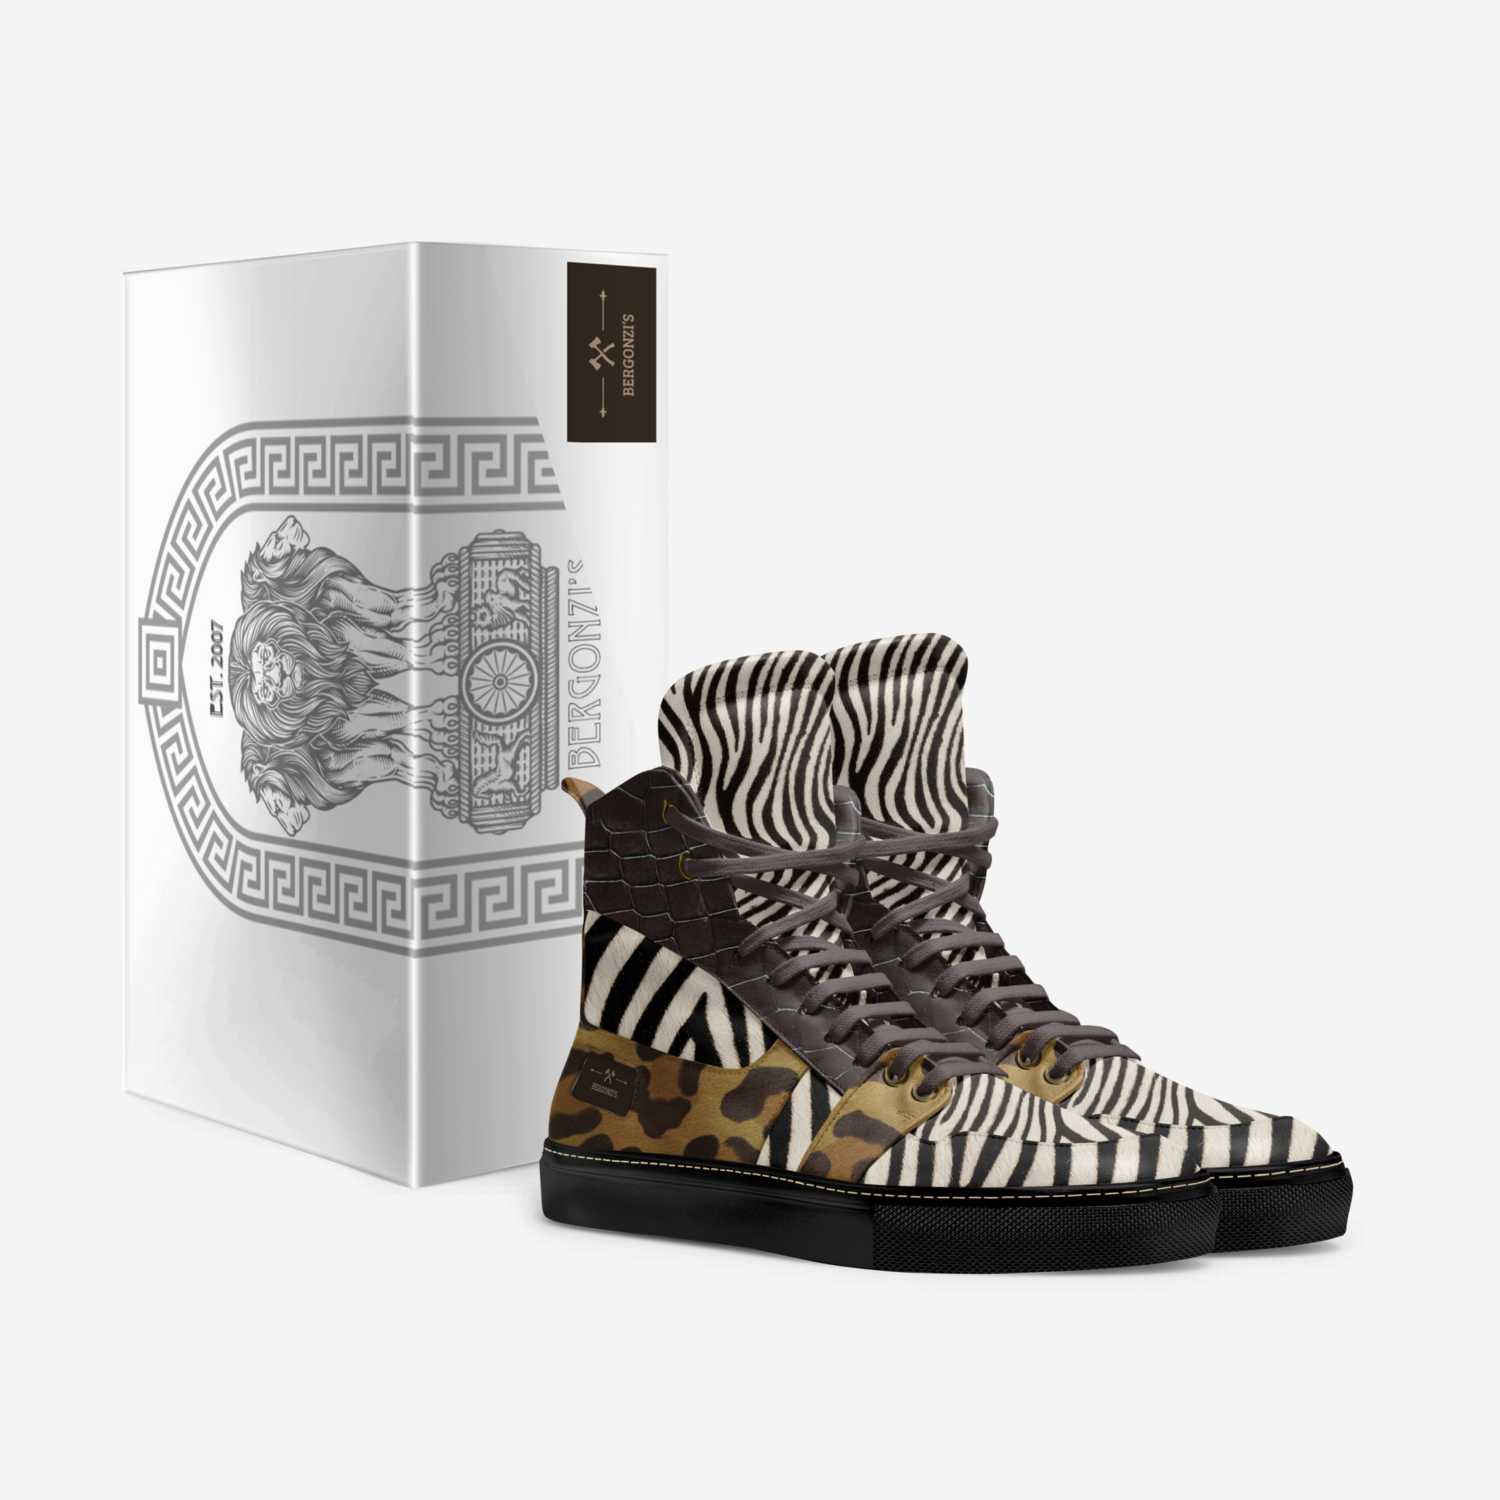 BERGONZI’S custom made in Italy shoes by Philippe Vein | Box view